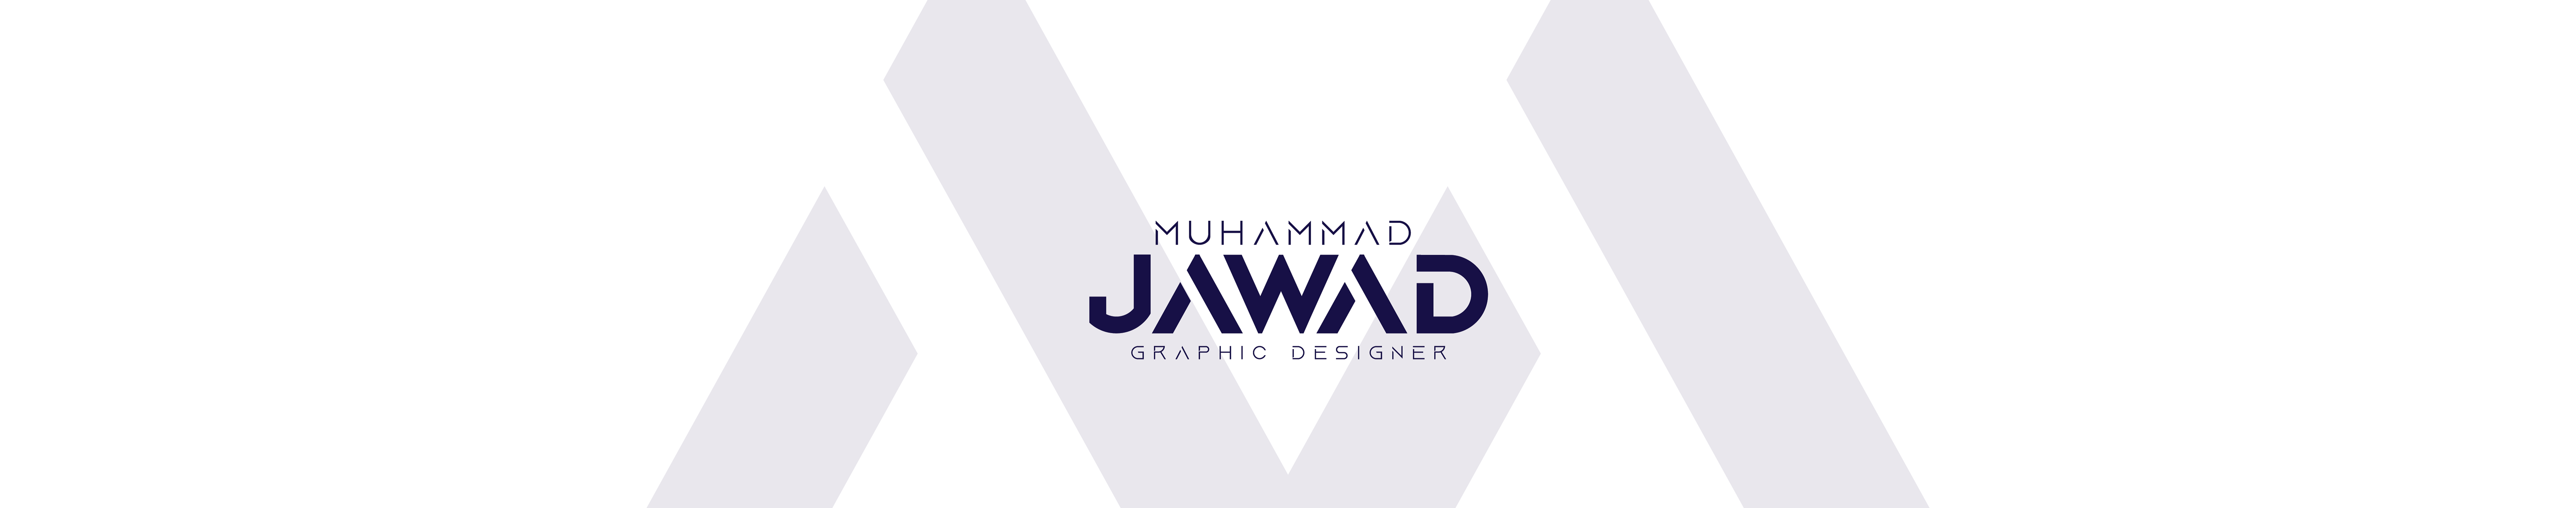 MUHAMMAD JAWAD's profile banner